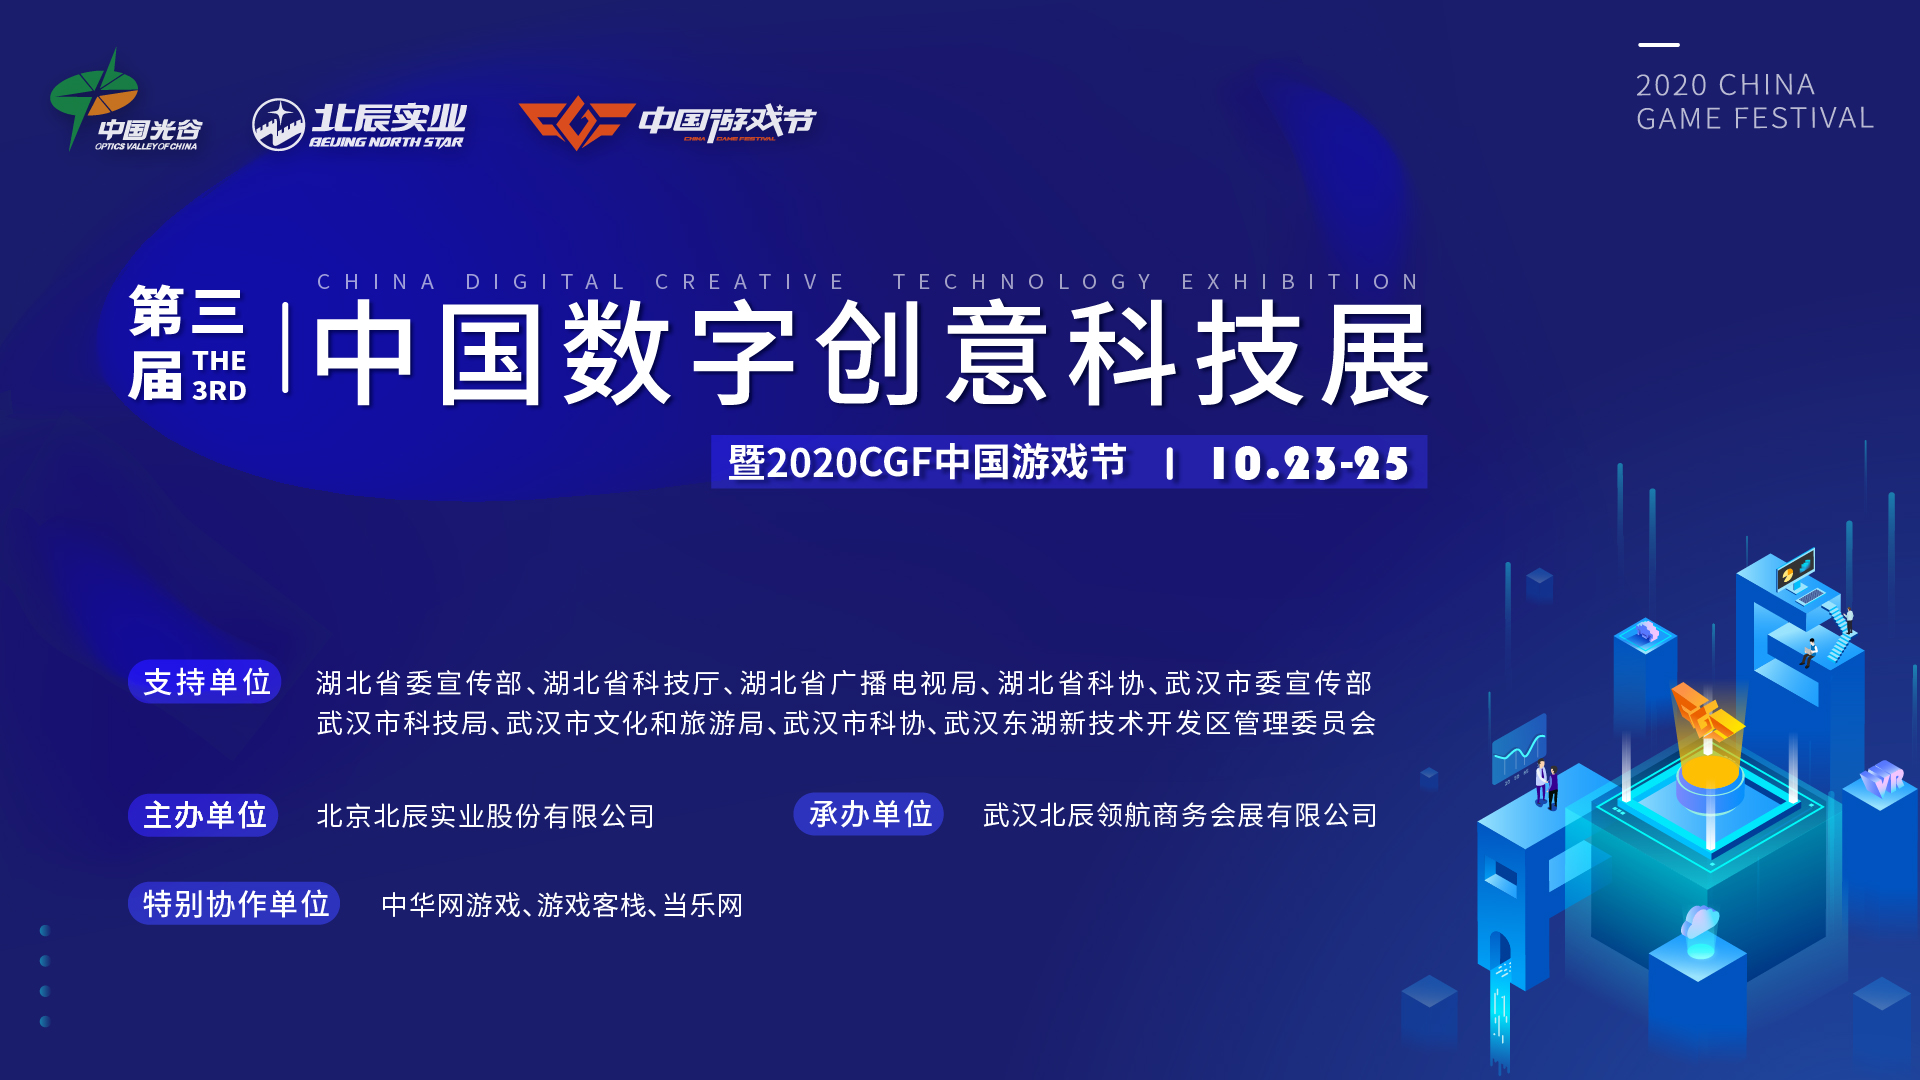 2020CGF中国游戏节线上展会重磅发布  沉浸式VR云展厅10月上线